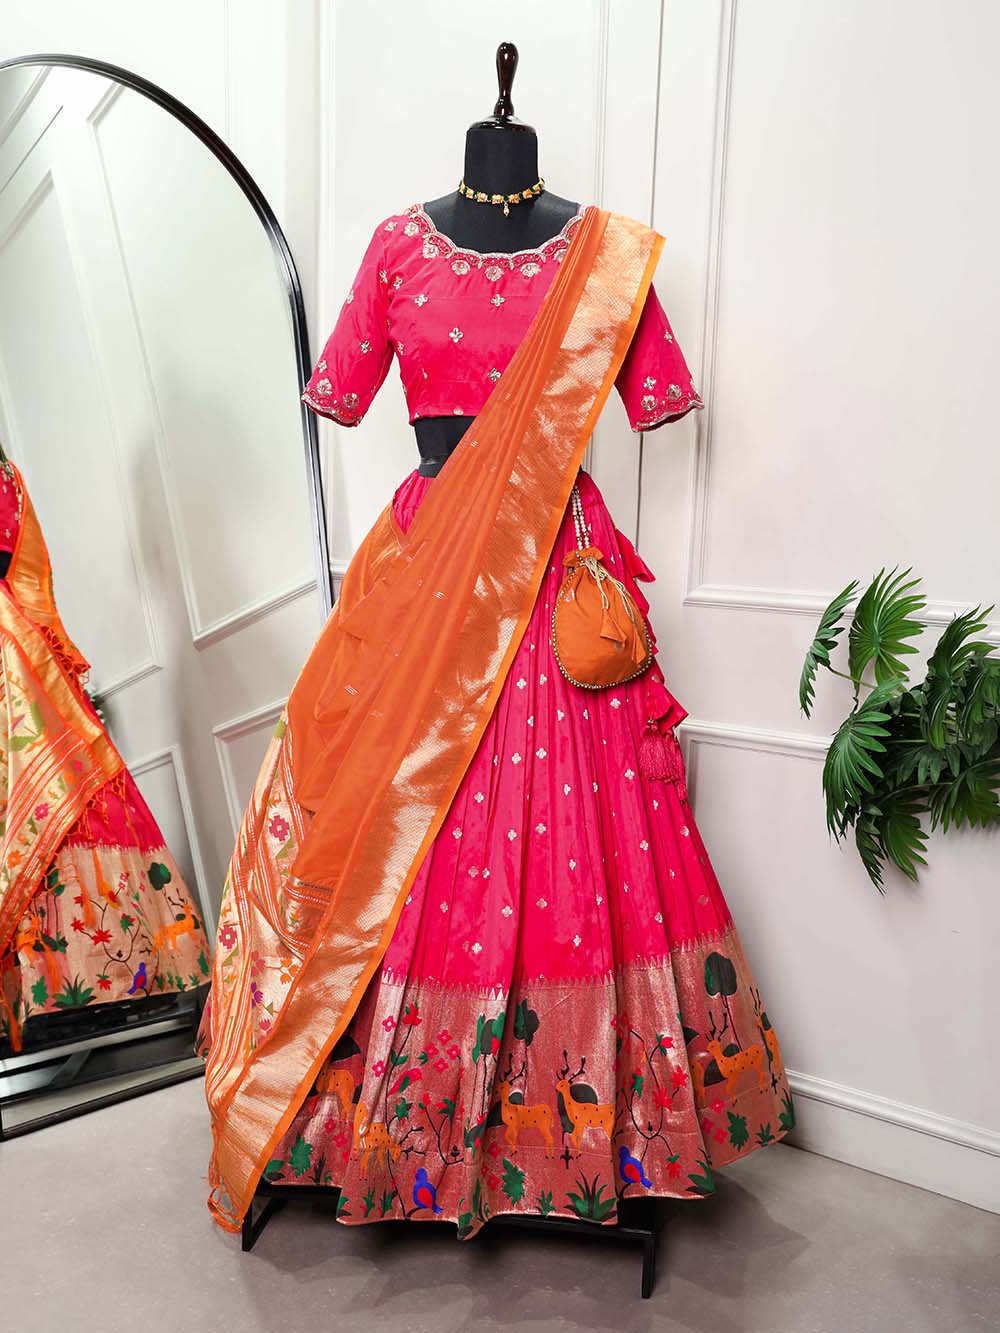 Shop Pattu Lehenga Designs for Women Online from India's Luxury Designers  2024